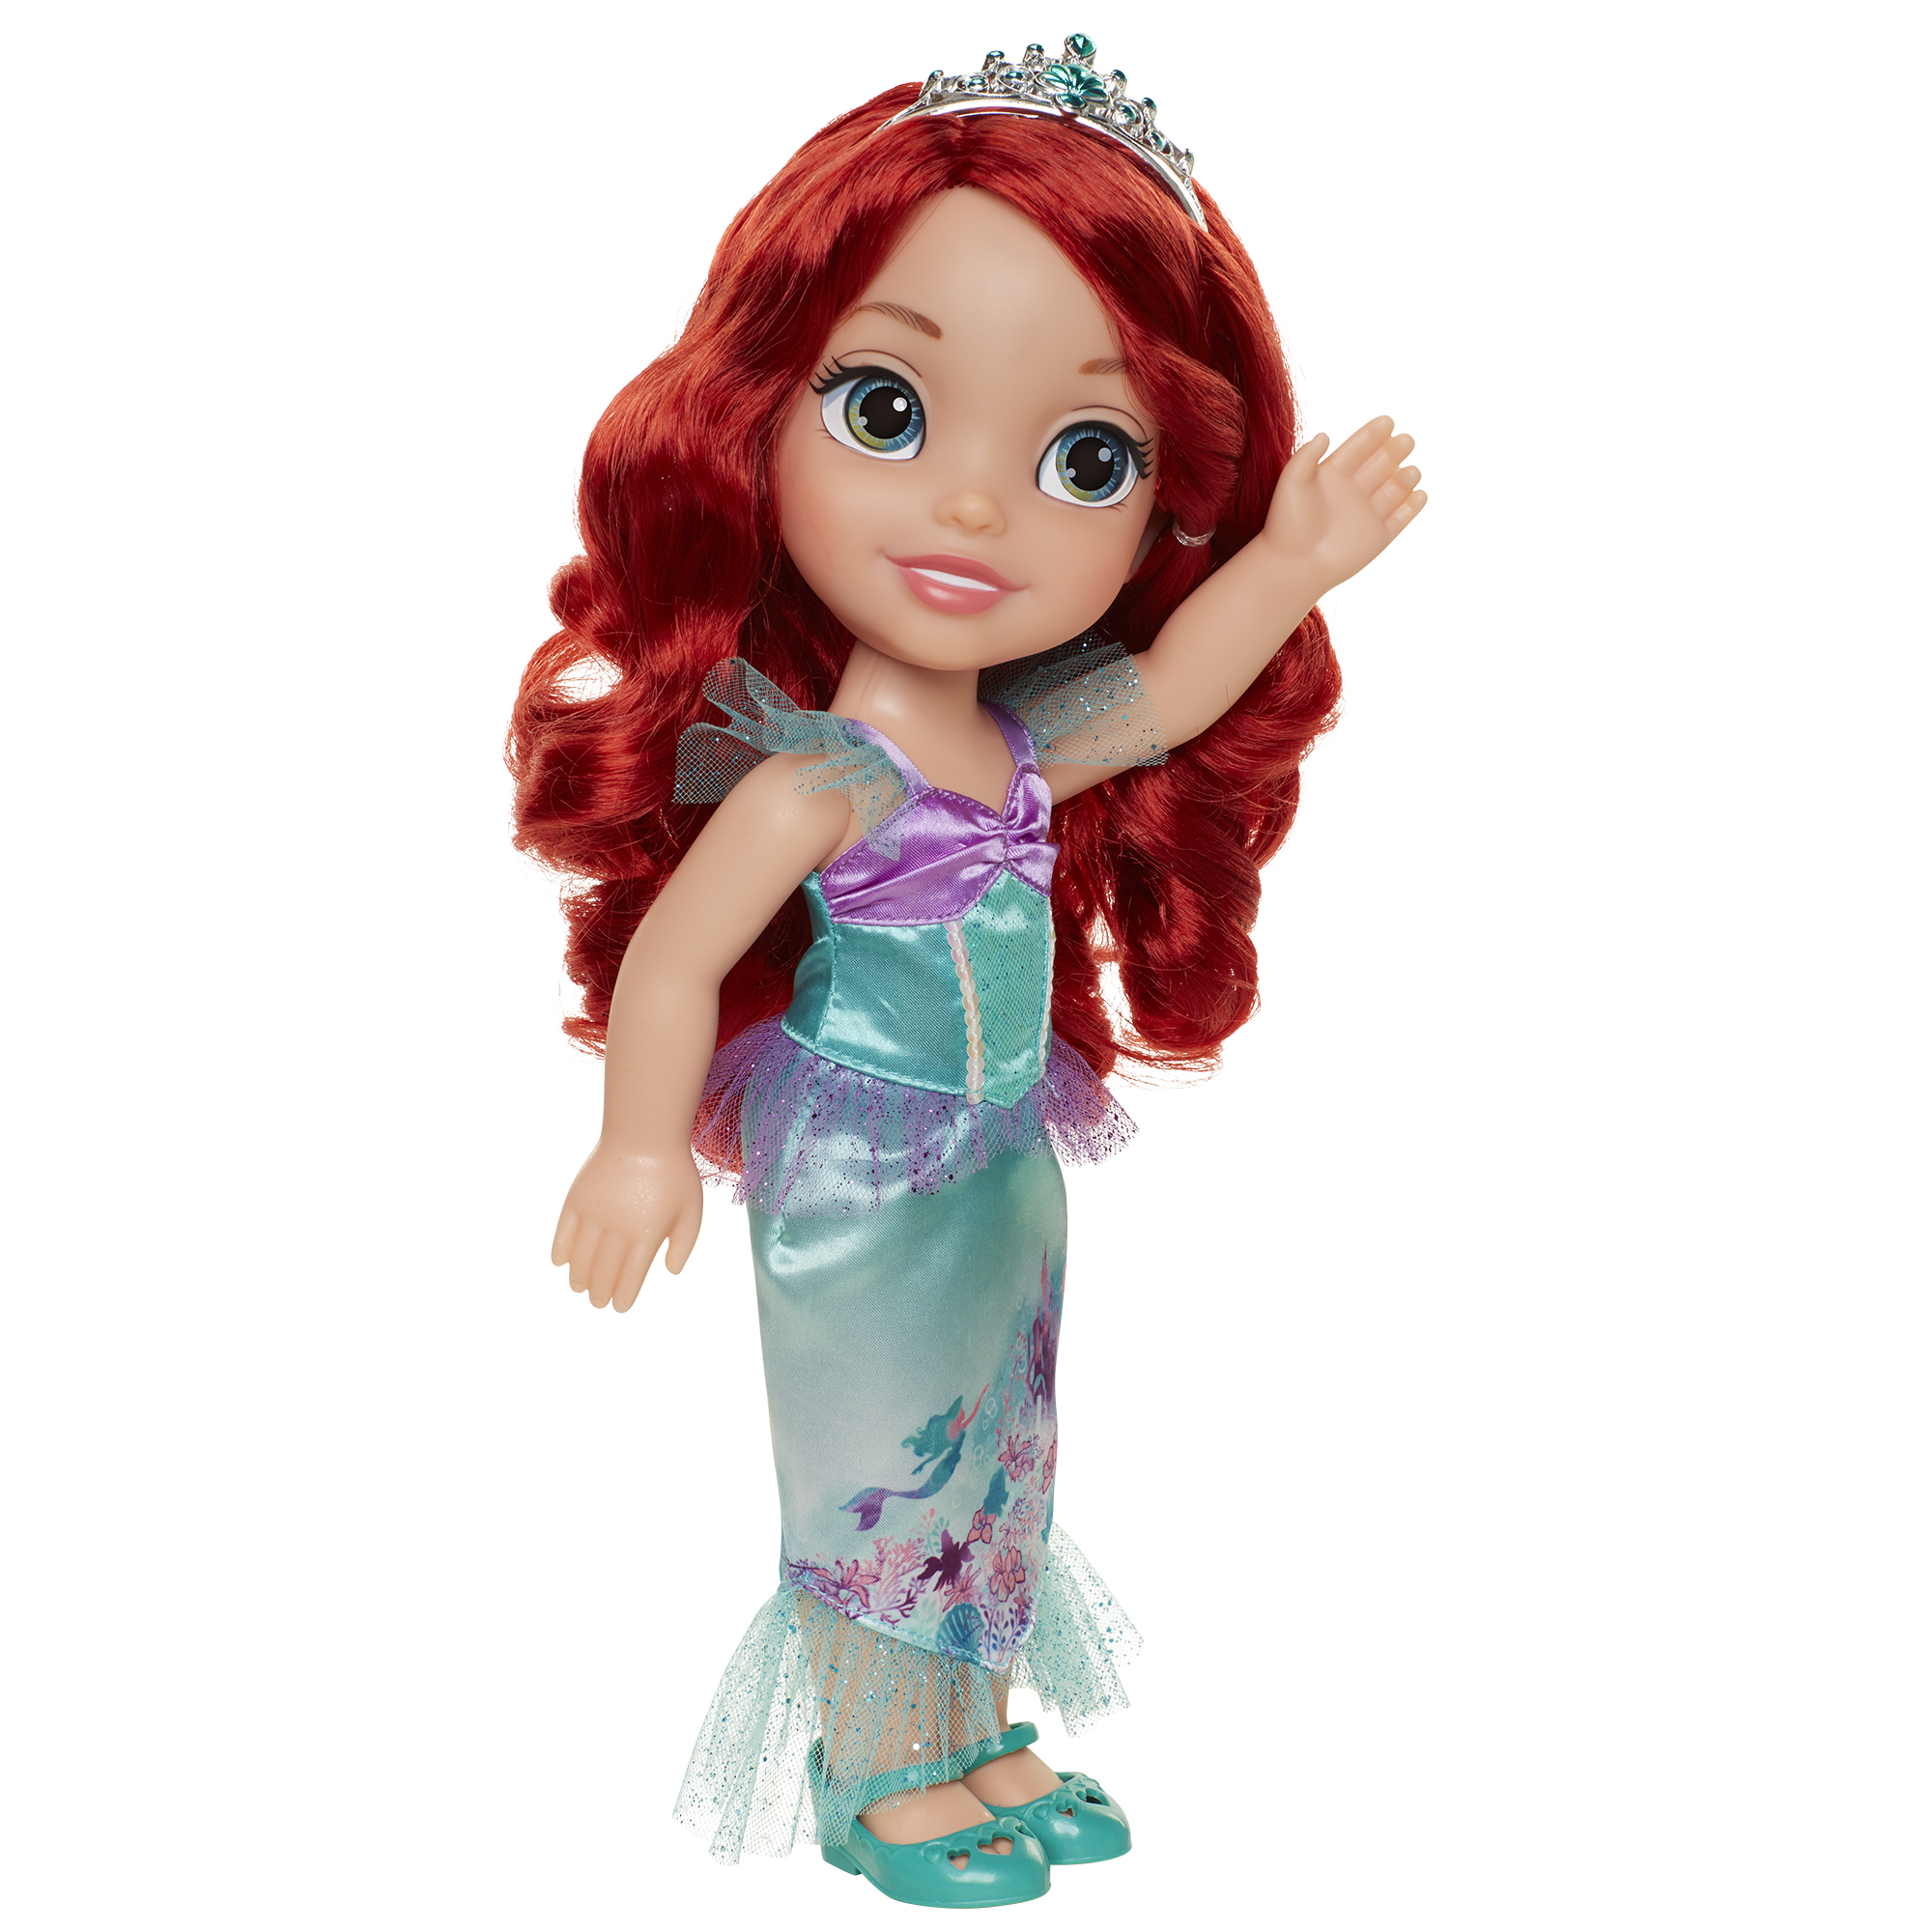 Disney Princess Explore Your World Ariel Large Fashion Doll - image 5 of 6